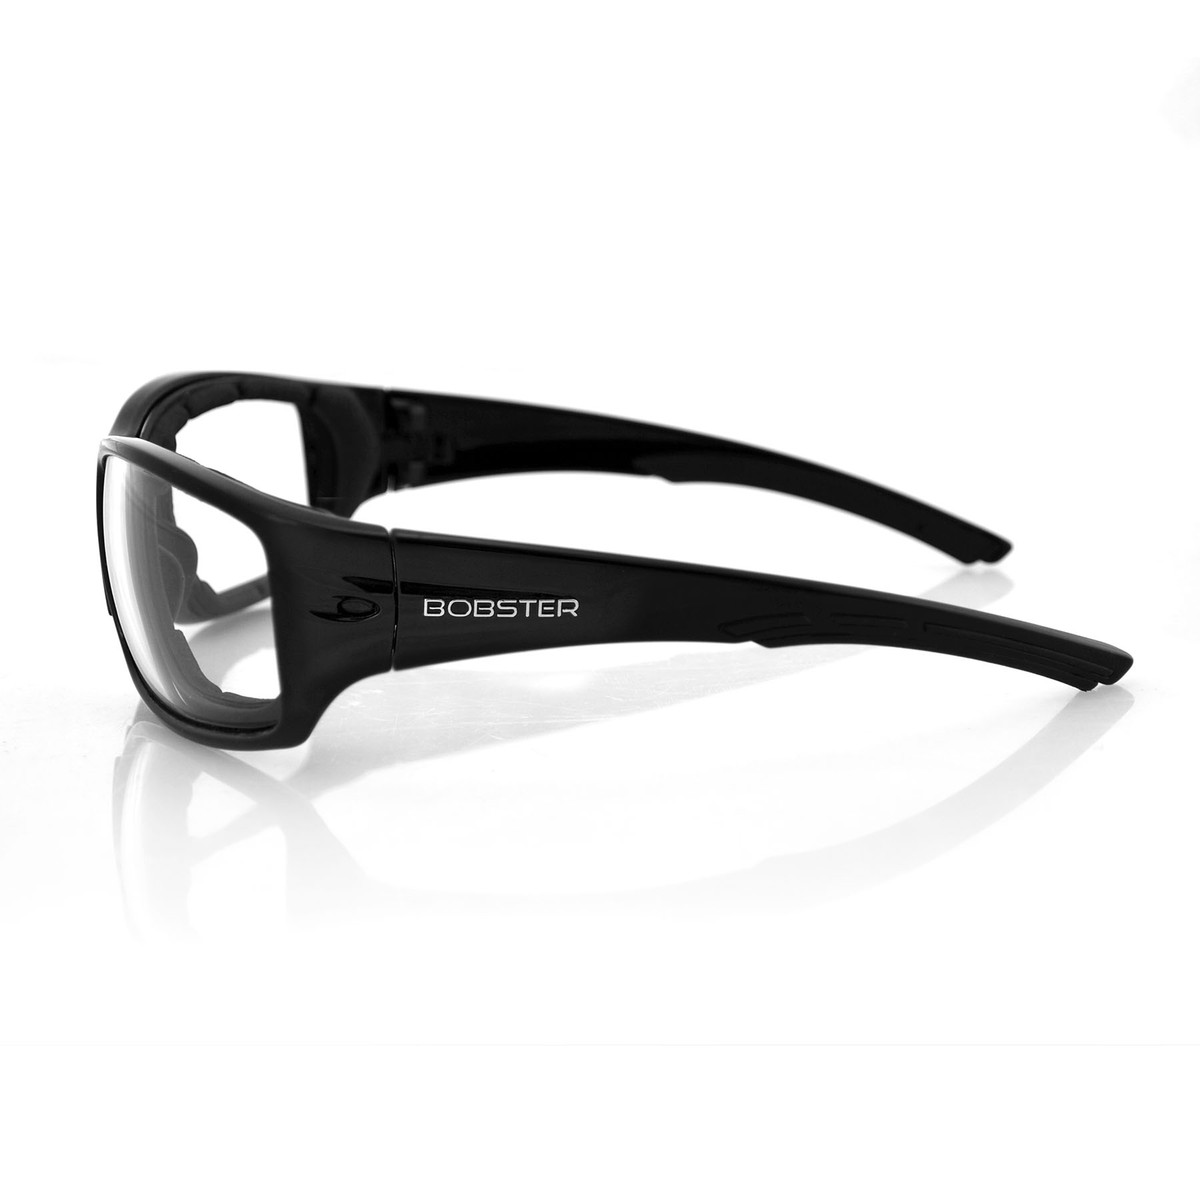 Bobster Rukus Black Anti-Fog With Photochromatic Lens sunglasses